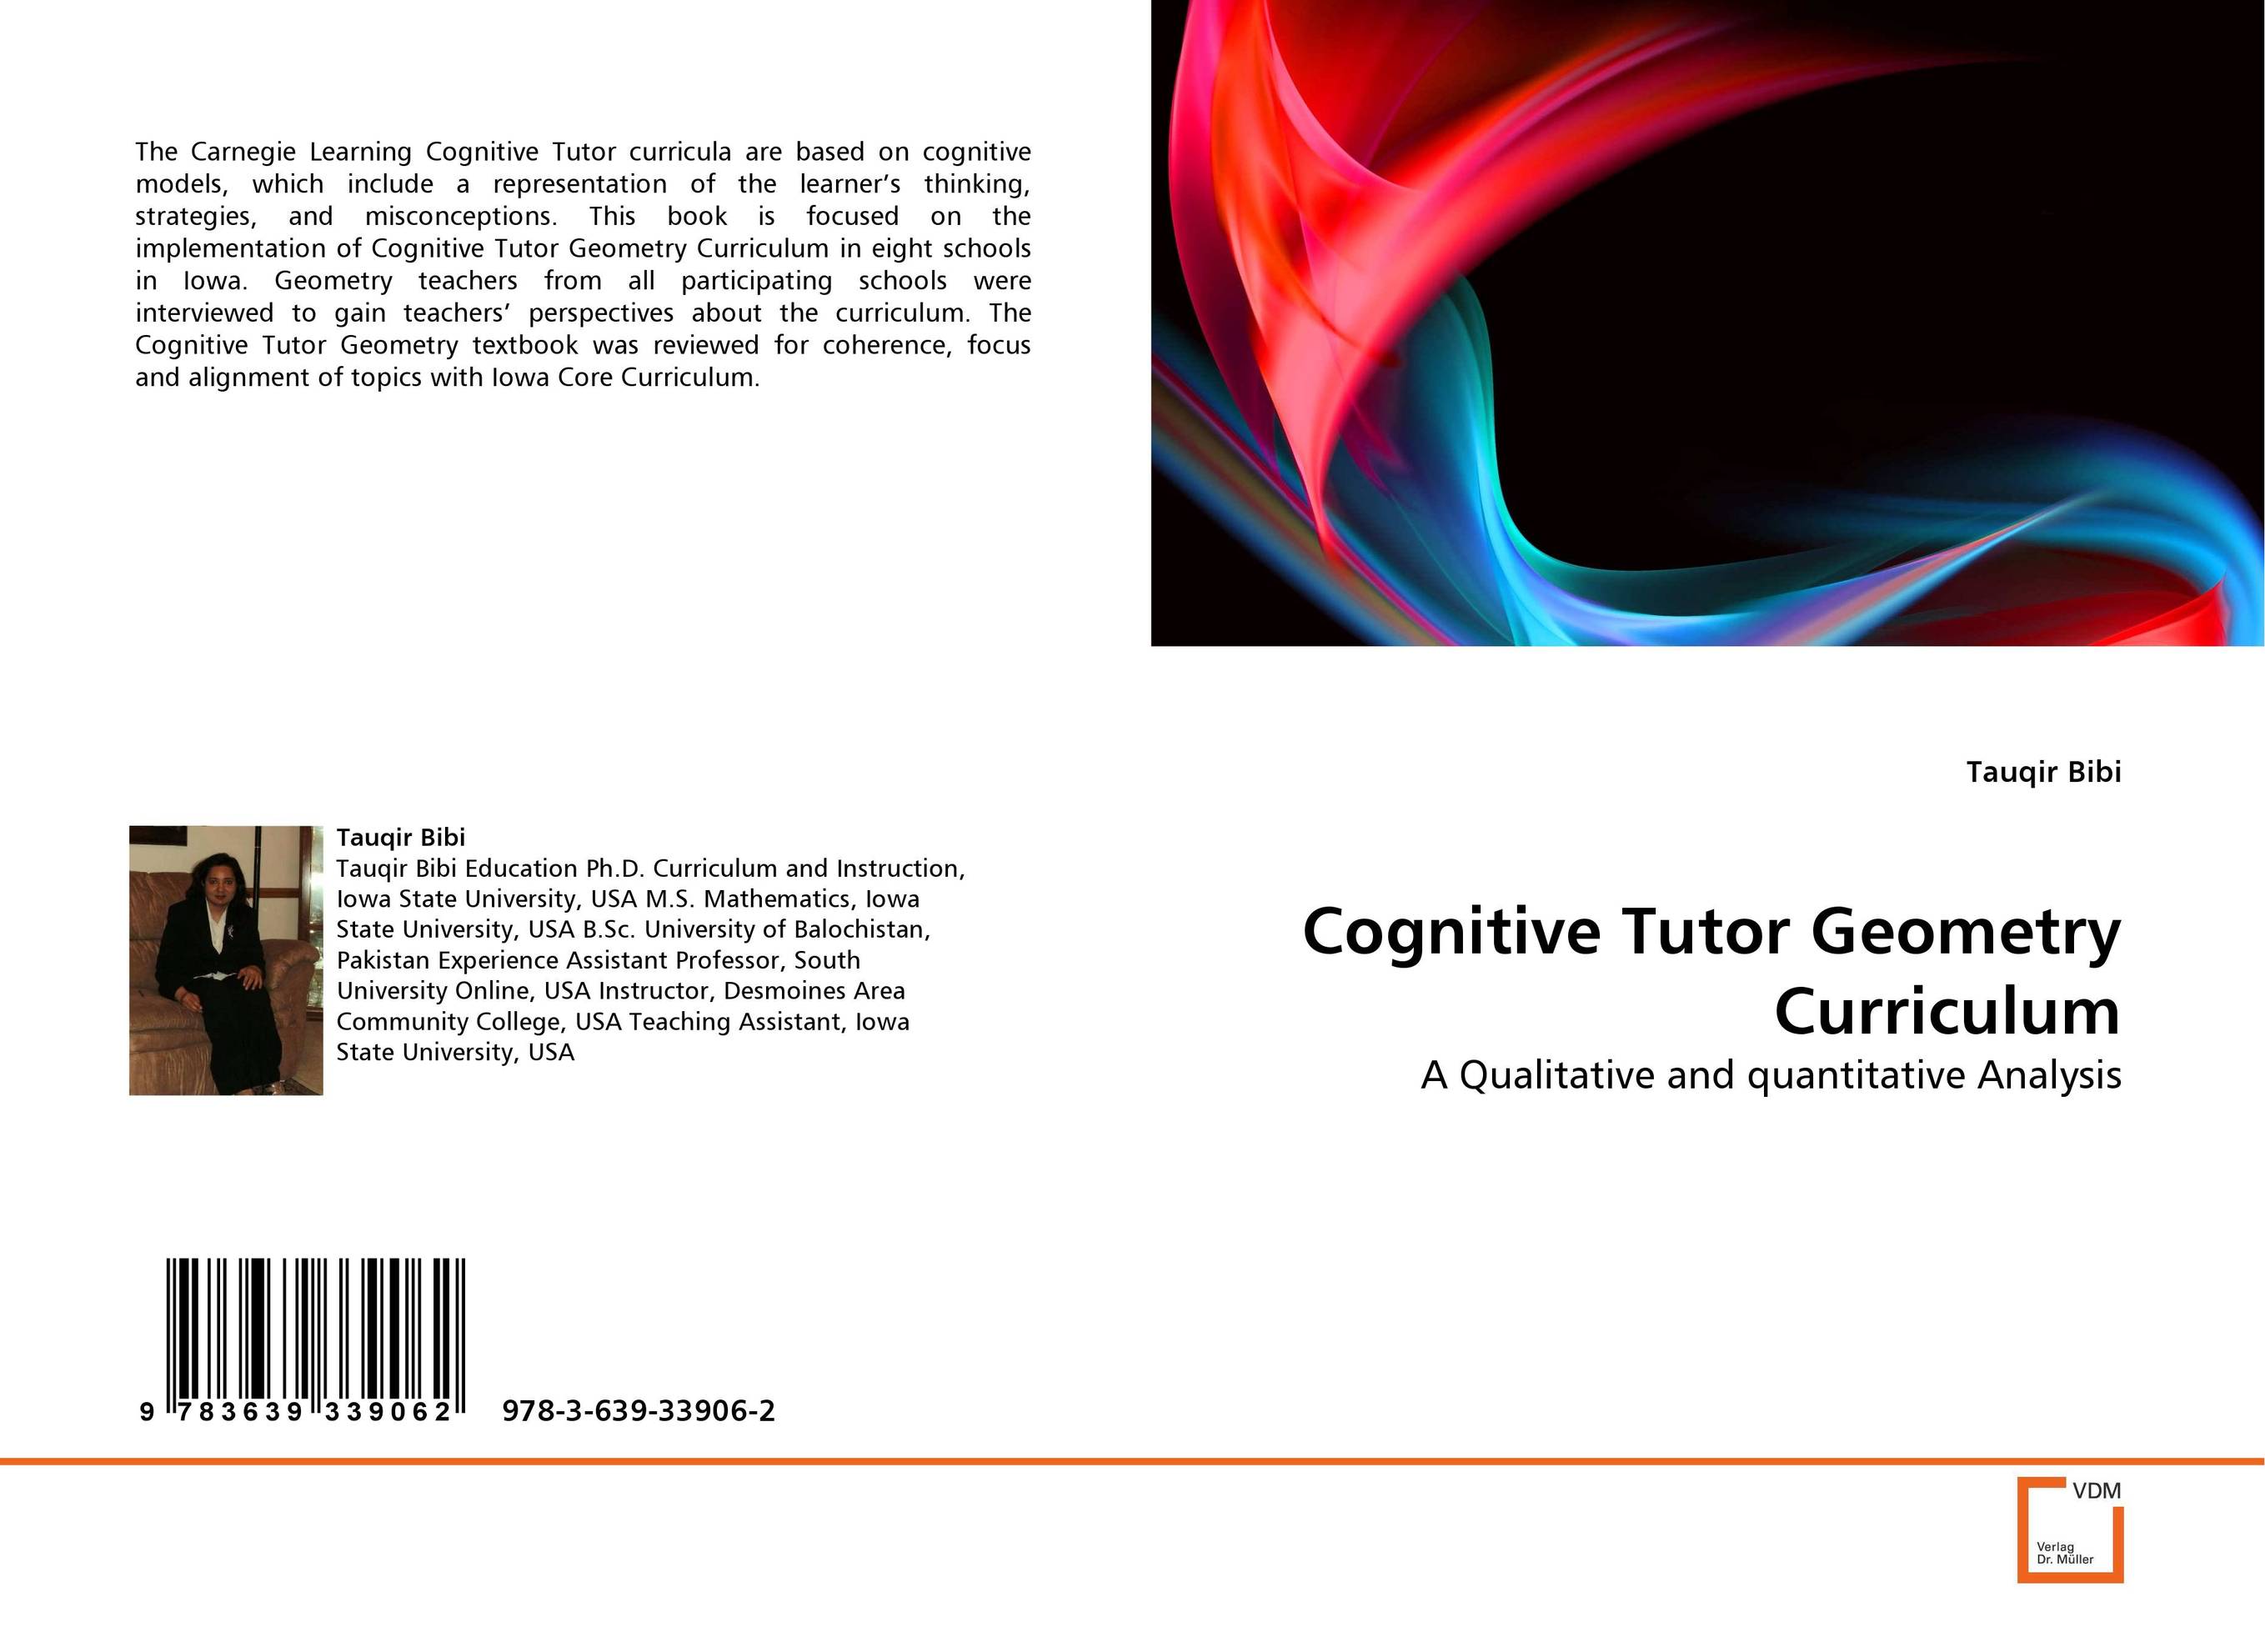 Cognitive Tutor Geometry Curriculum